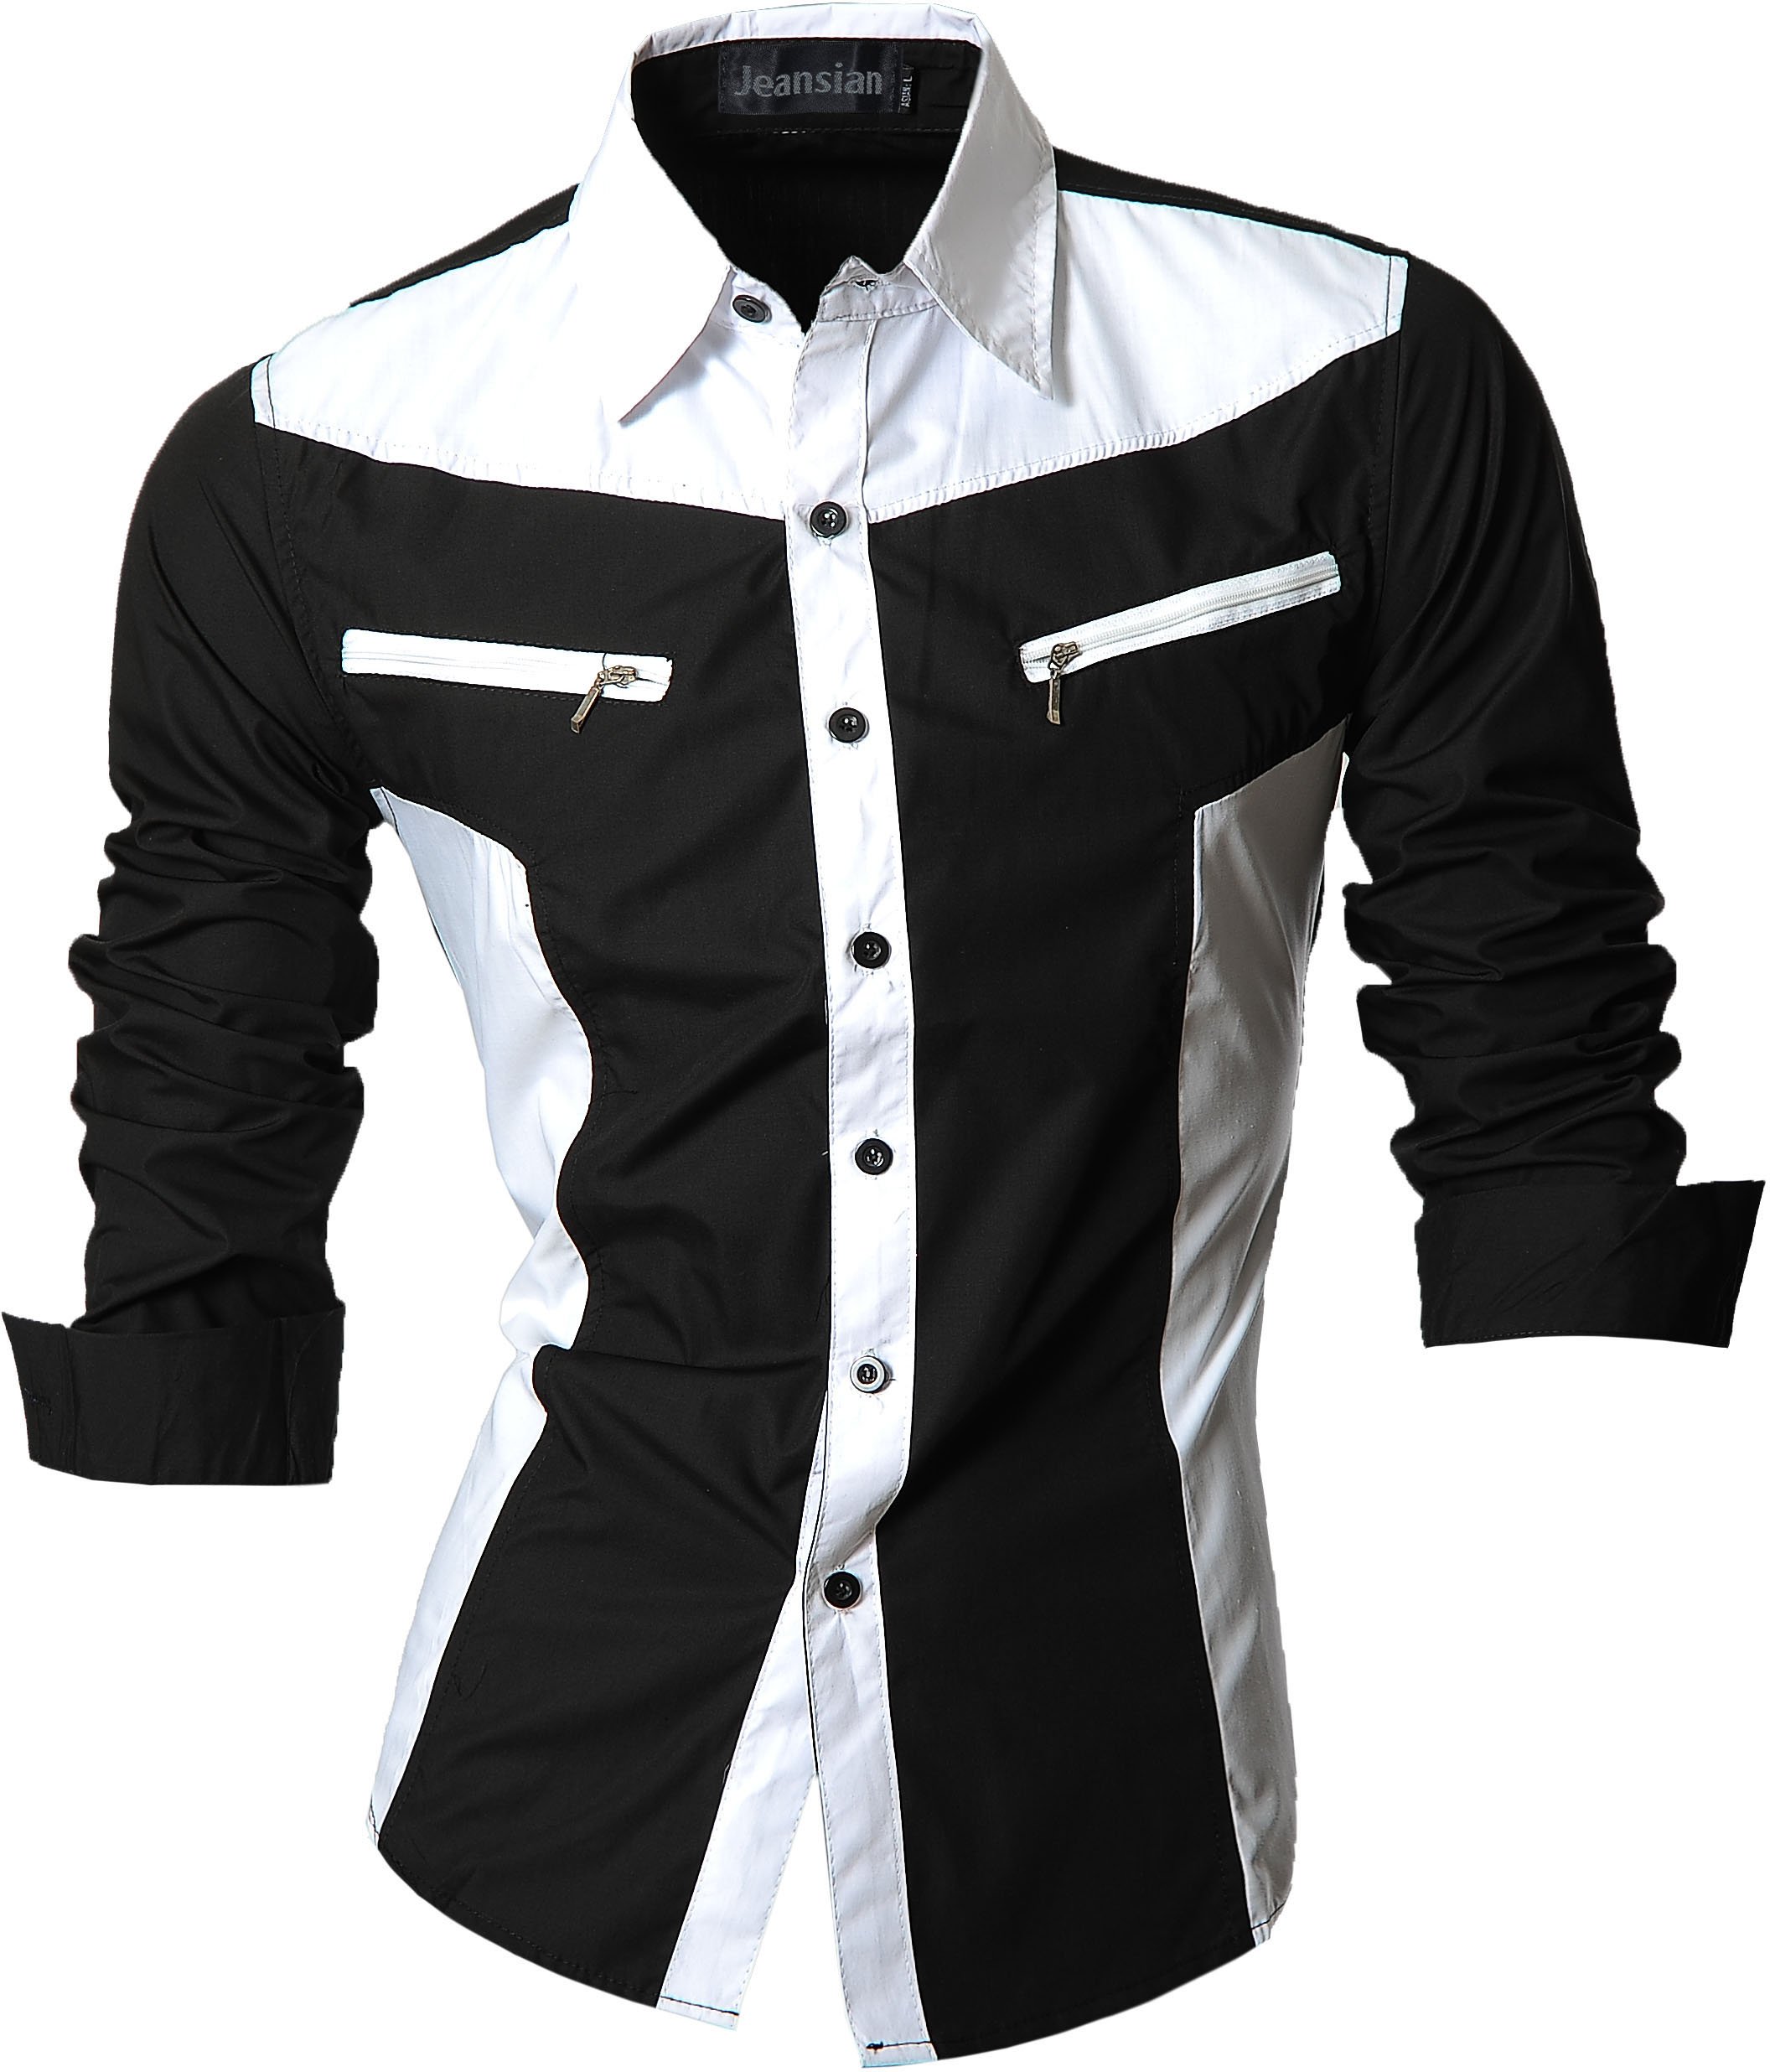 jeansian Herren Freizeit Hemden Shirt Tops Mode Langarmshirts Slim Fit Z018 Black M